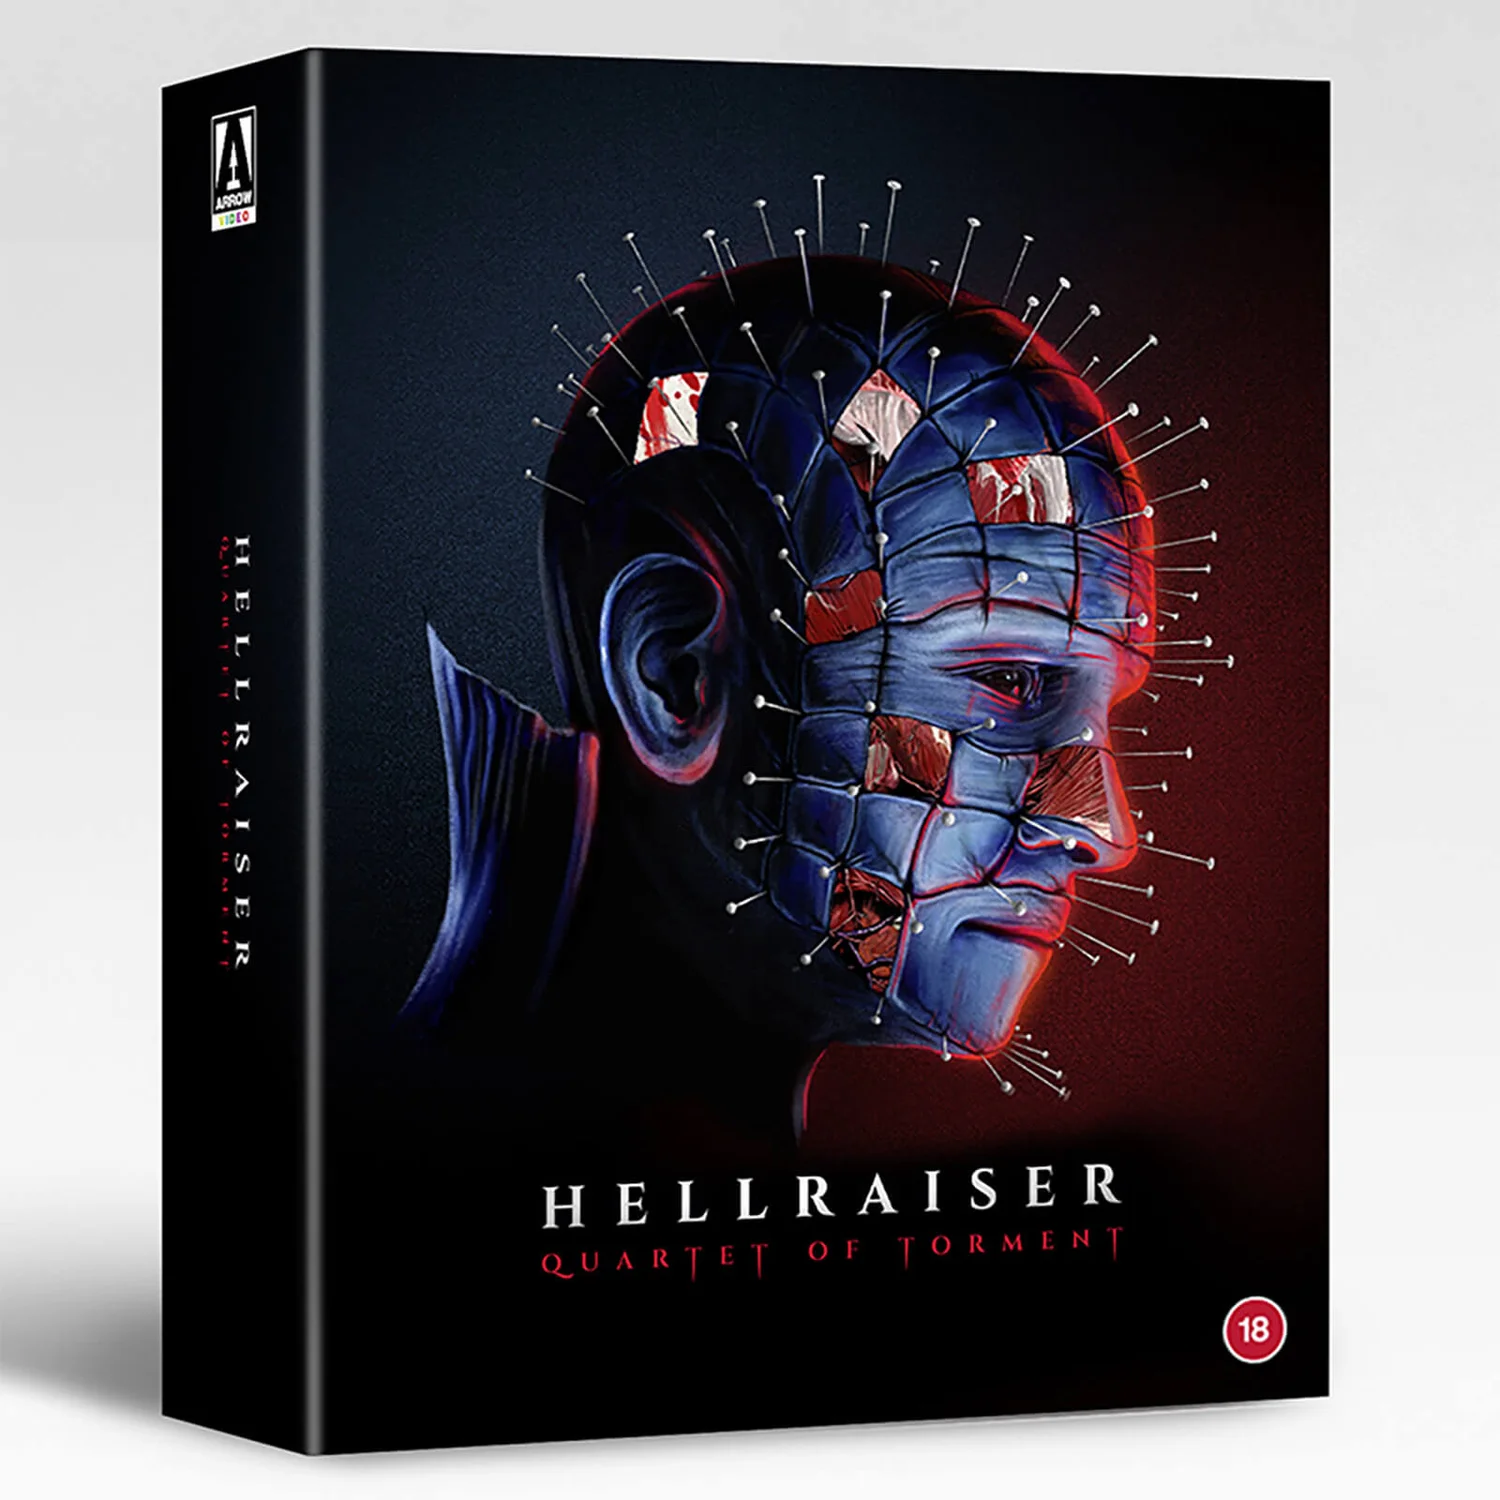 Hellraiser | Quartet Of Torment | Limited Edition Blu Ray